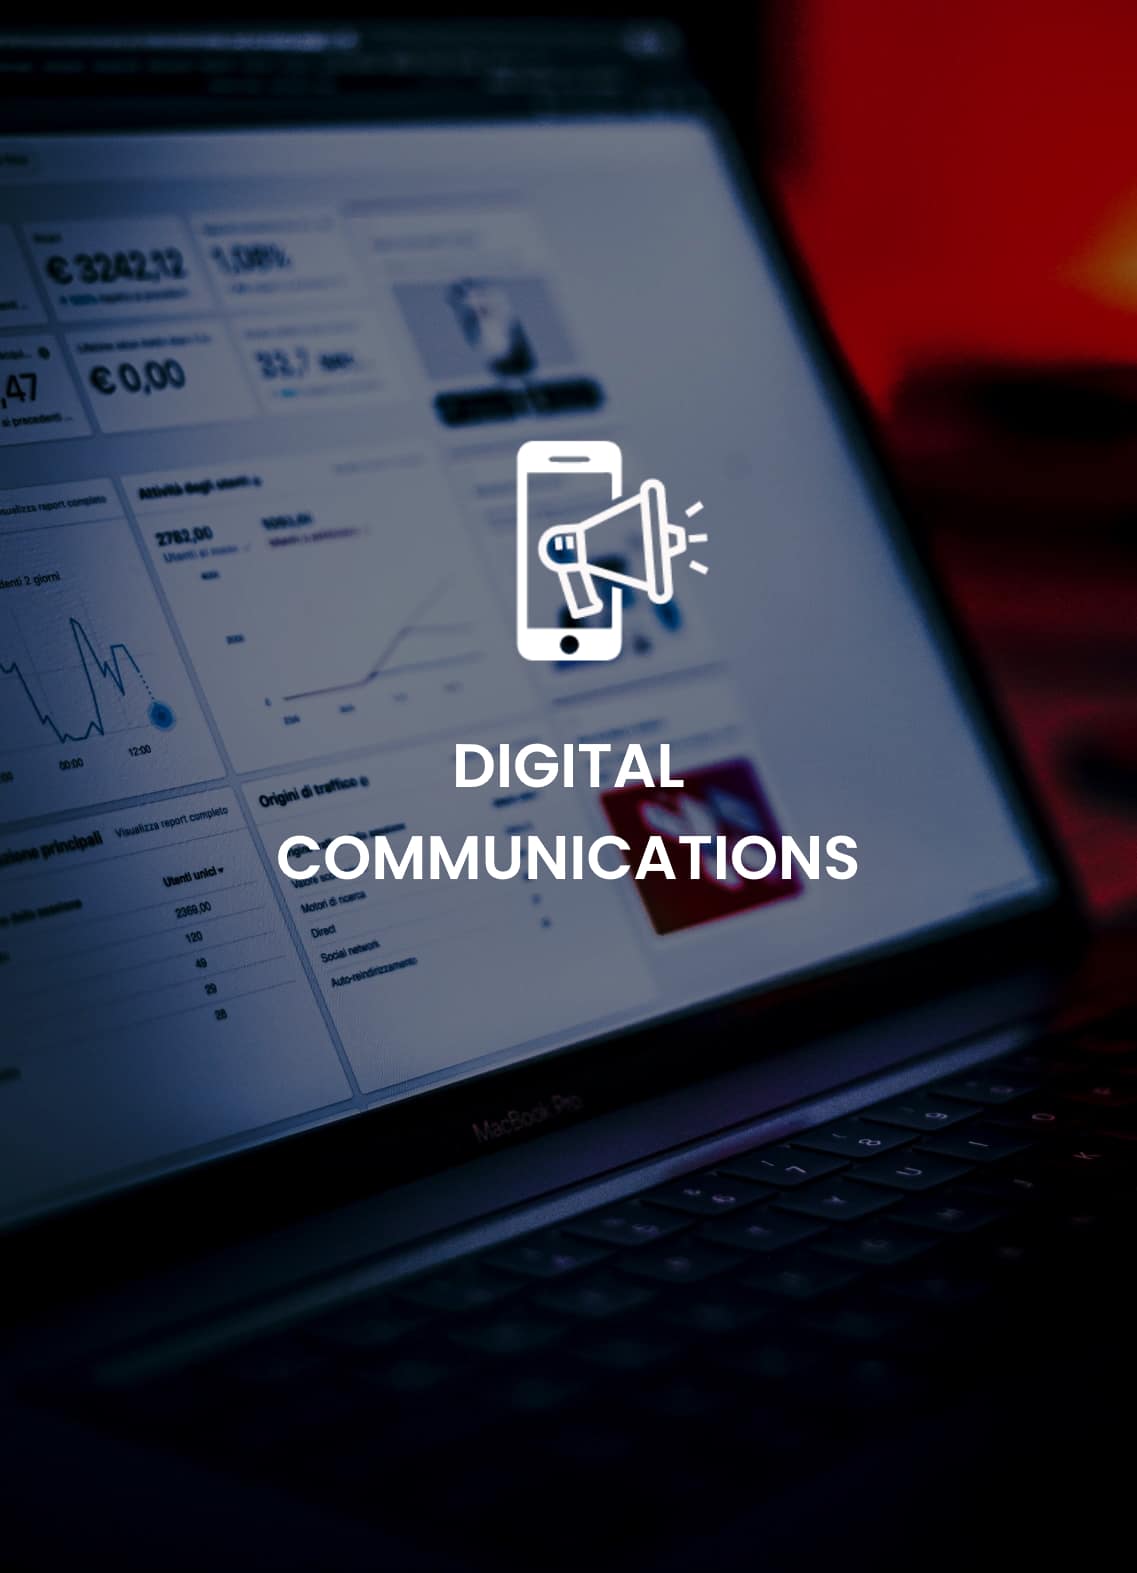 Digital-Communications-service